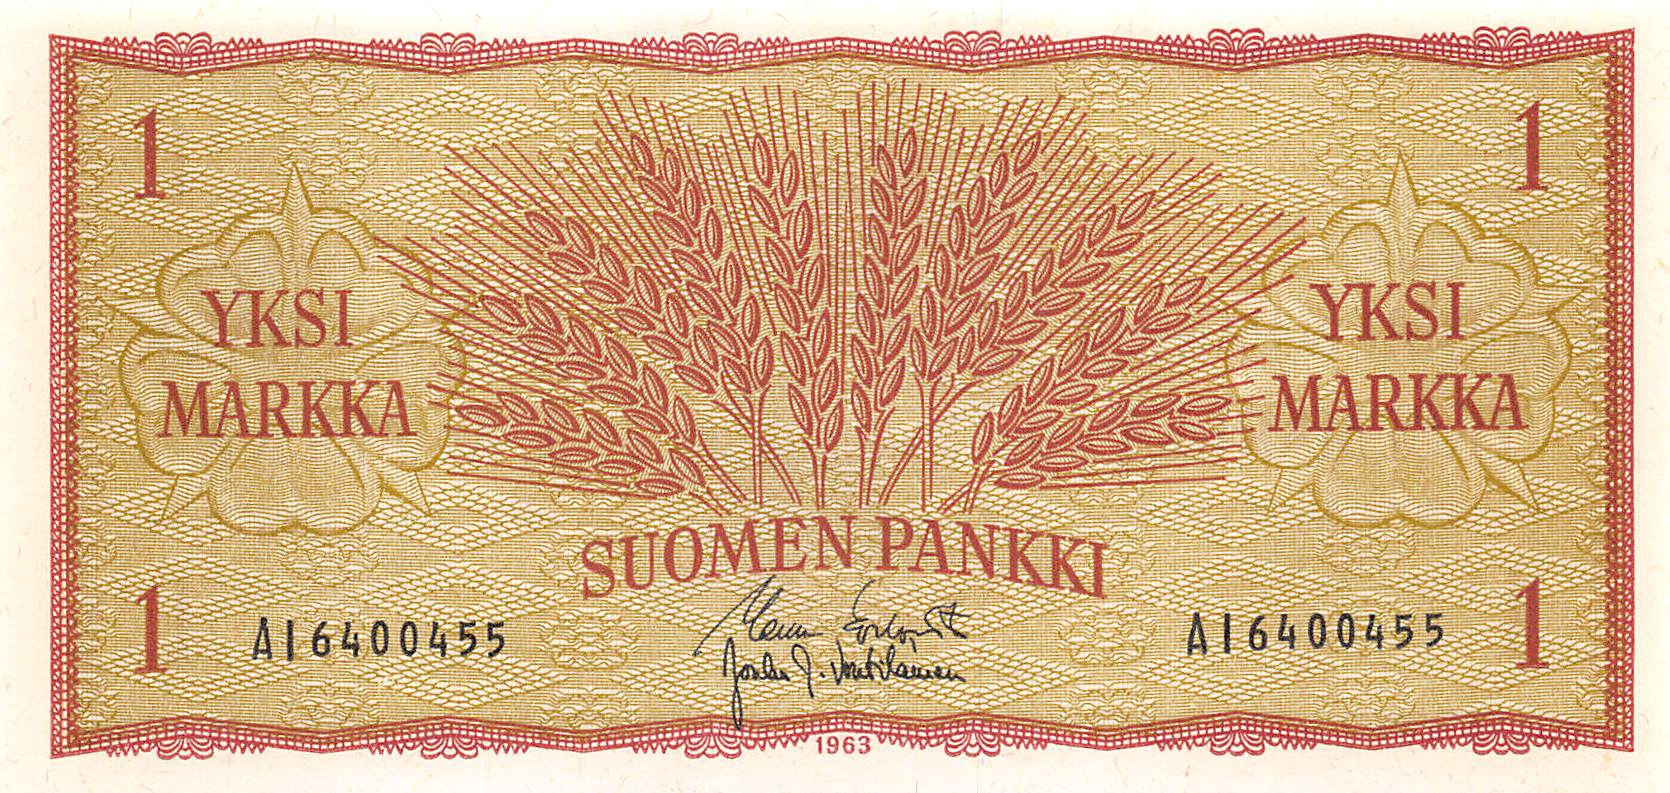 Finland 1 Markka p-98 1963 UNC Banknote 